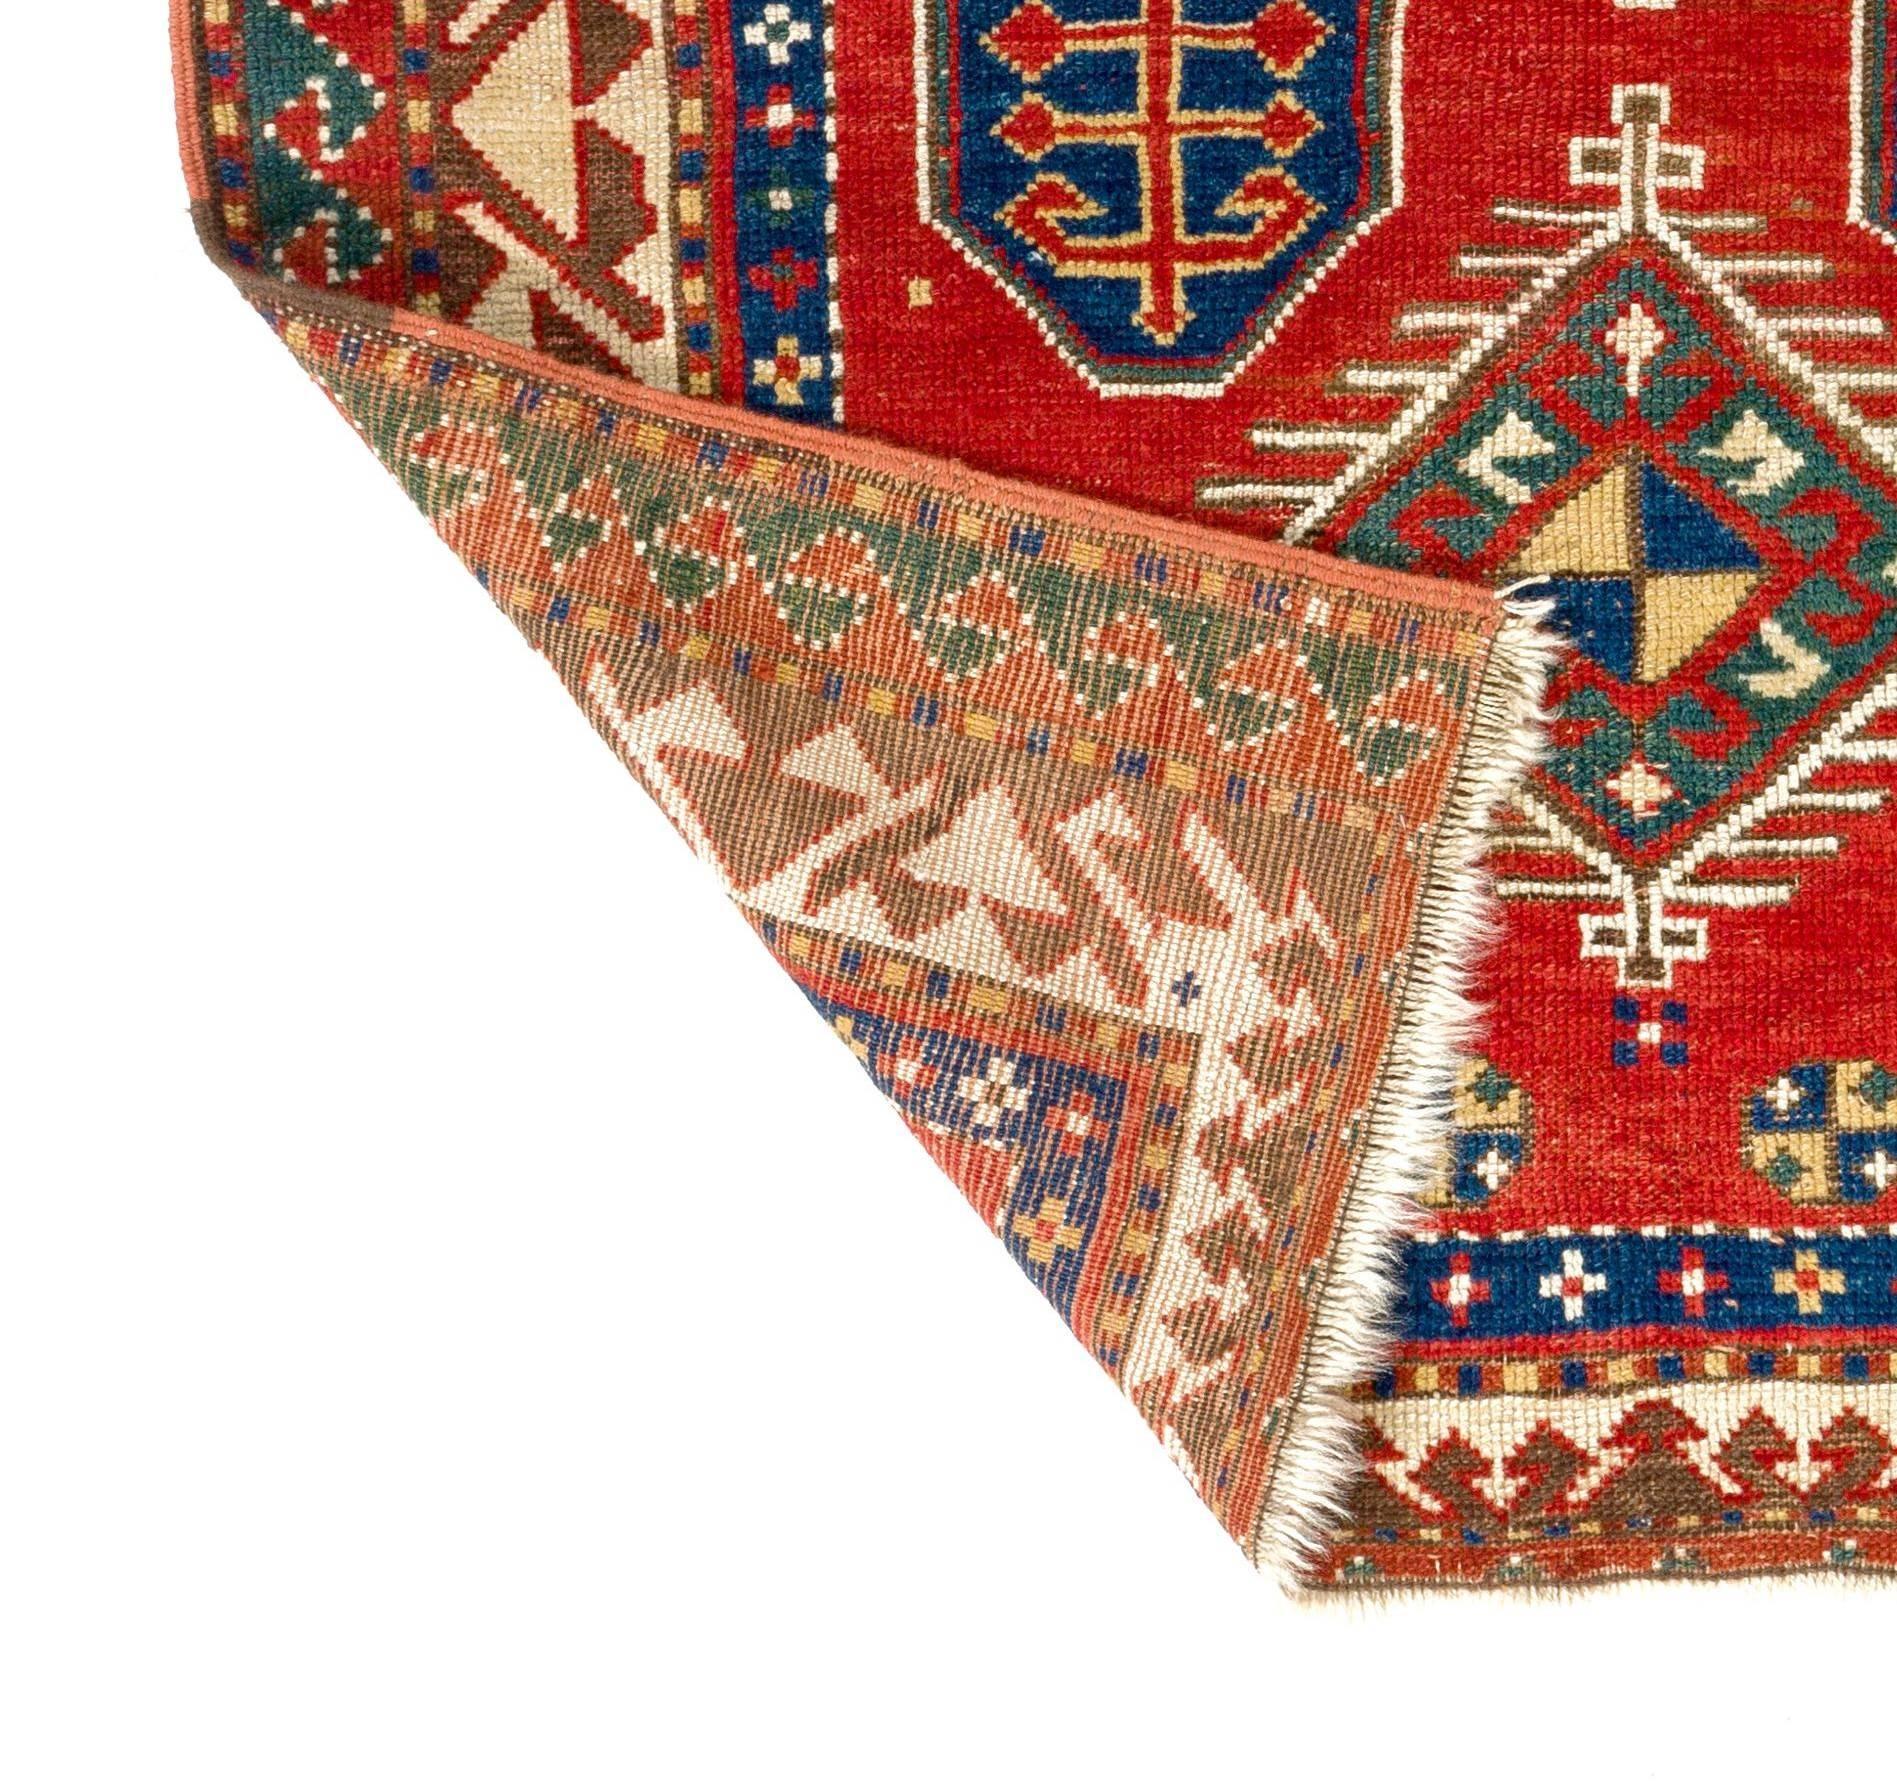 Hand-Knotted 3.5x3.9 Ft Rare Antique Caucasian Borchalo Kazak Prayer Rug, Ca 1875 For Sale